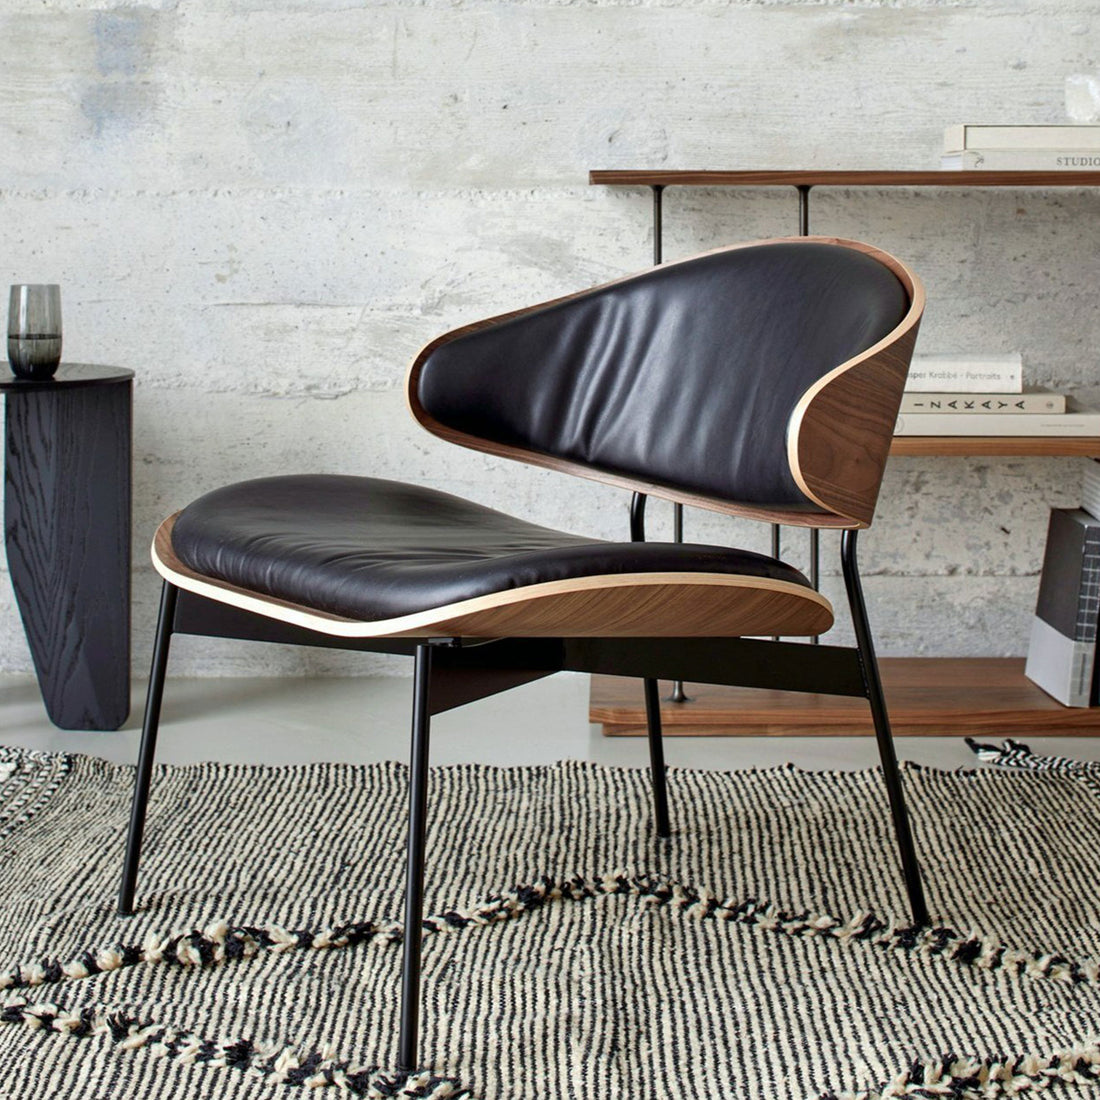 Luz | Lounge Chair